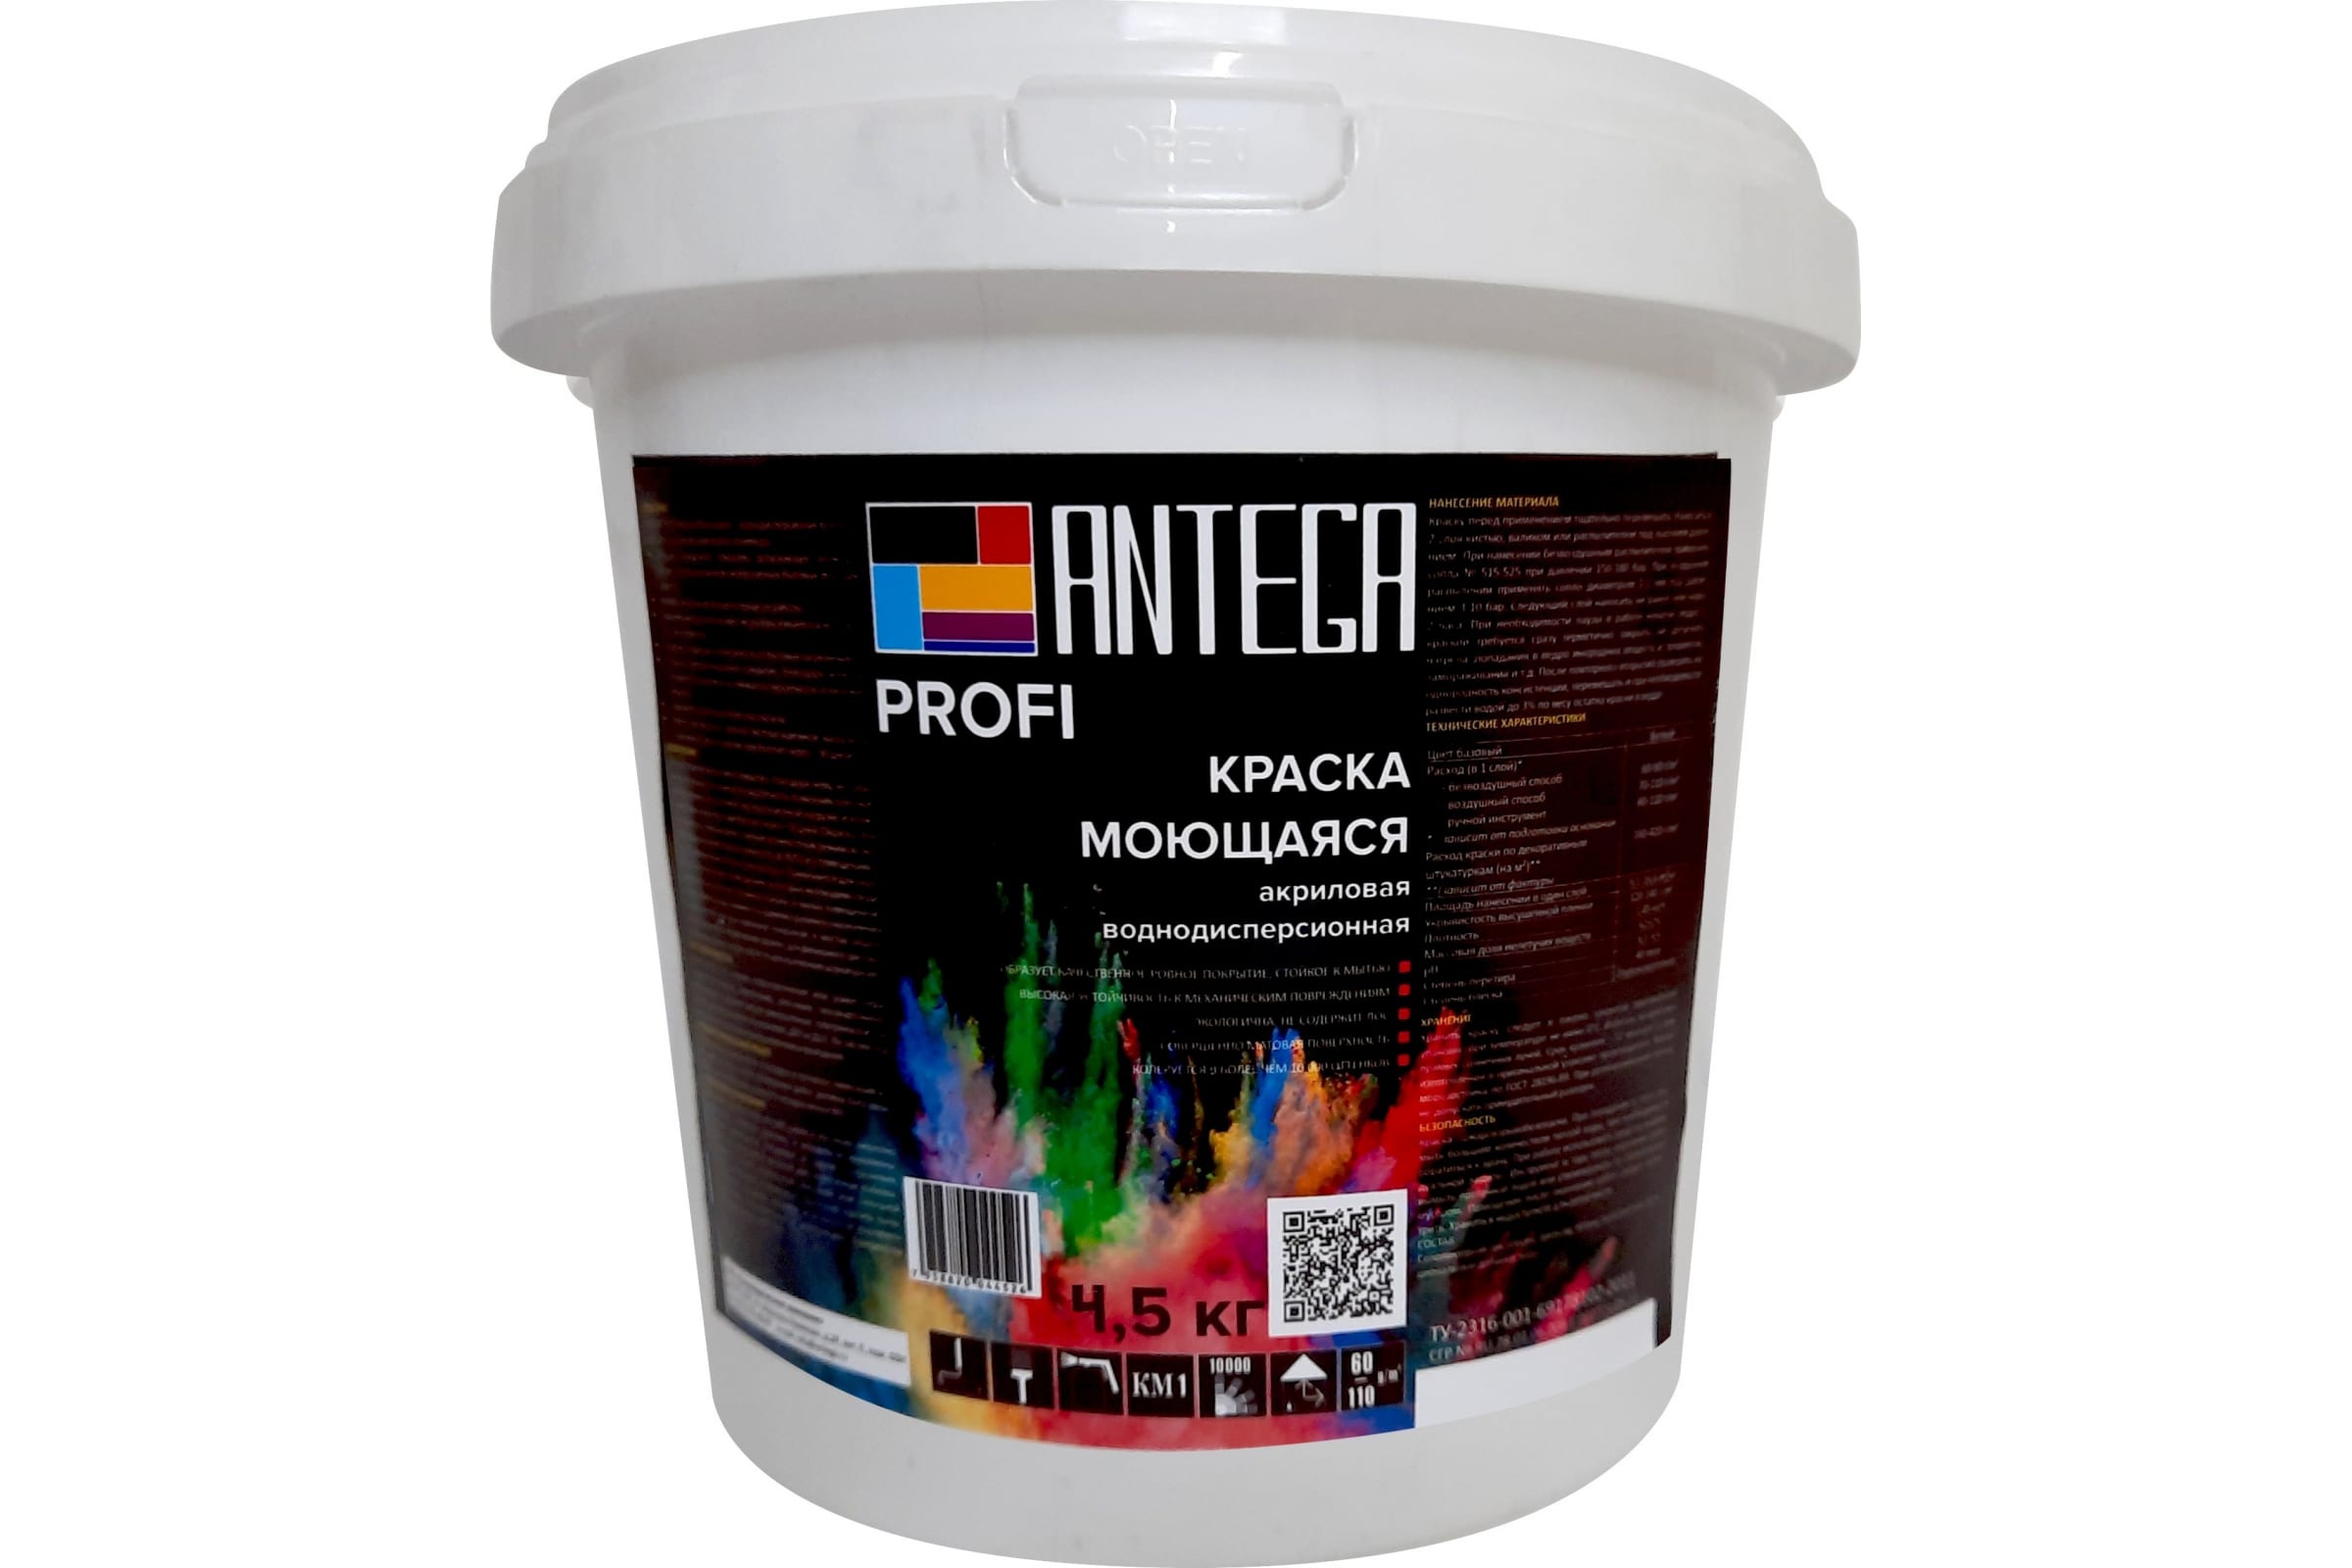 фото Antega profi краска моющаяся, 4,5 кг ant-2044